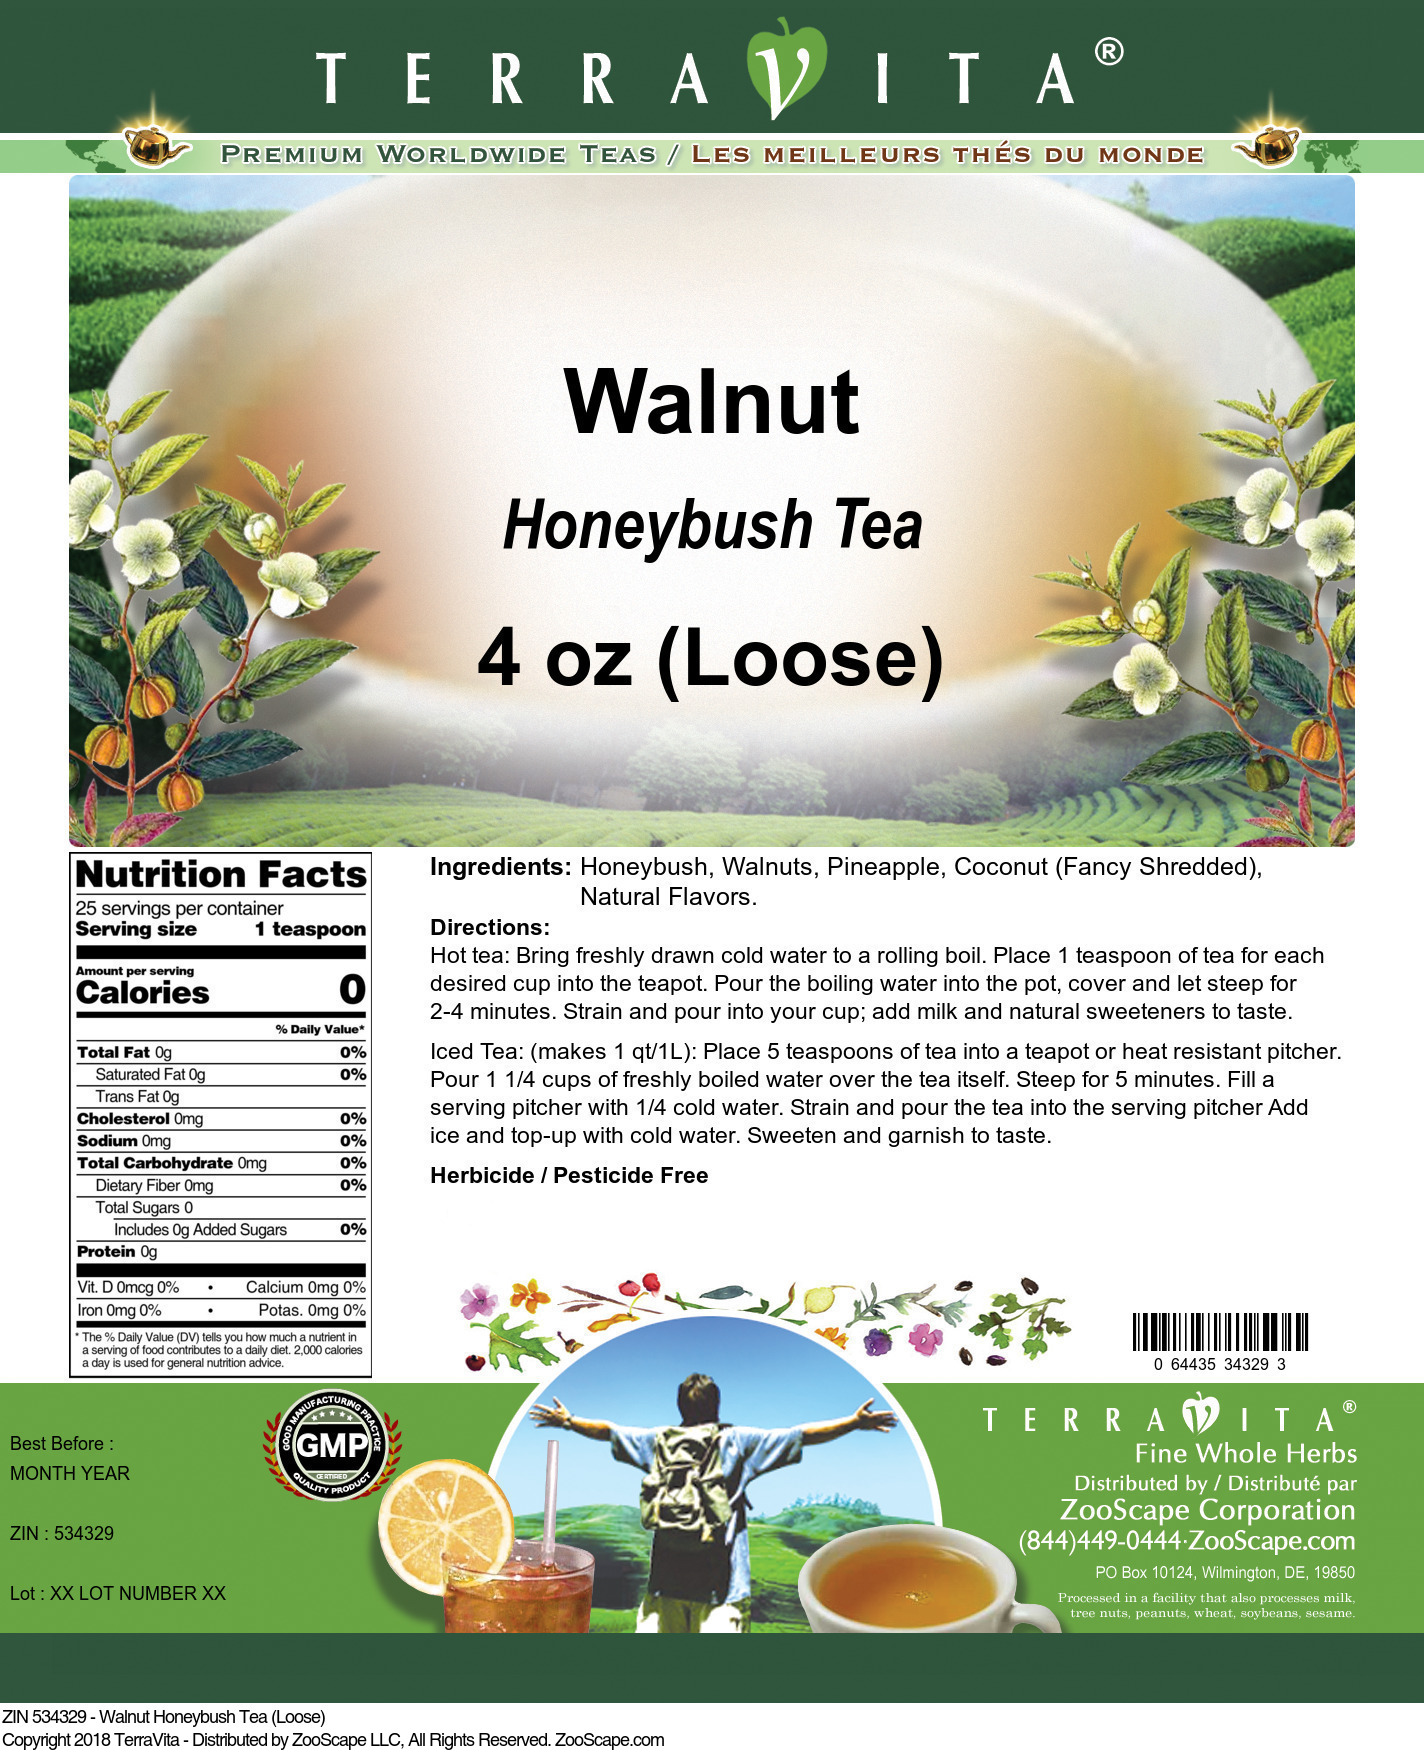 Walnut Honeybush Tea (Loose) - Label